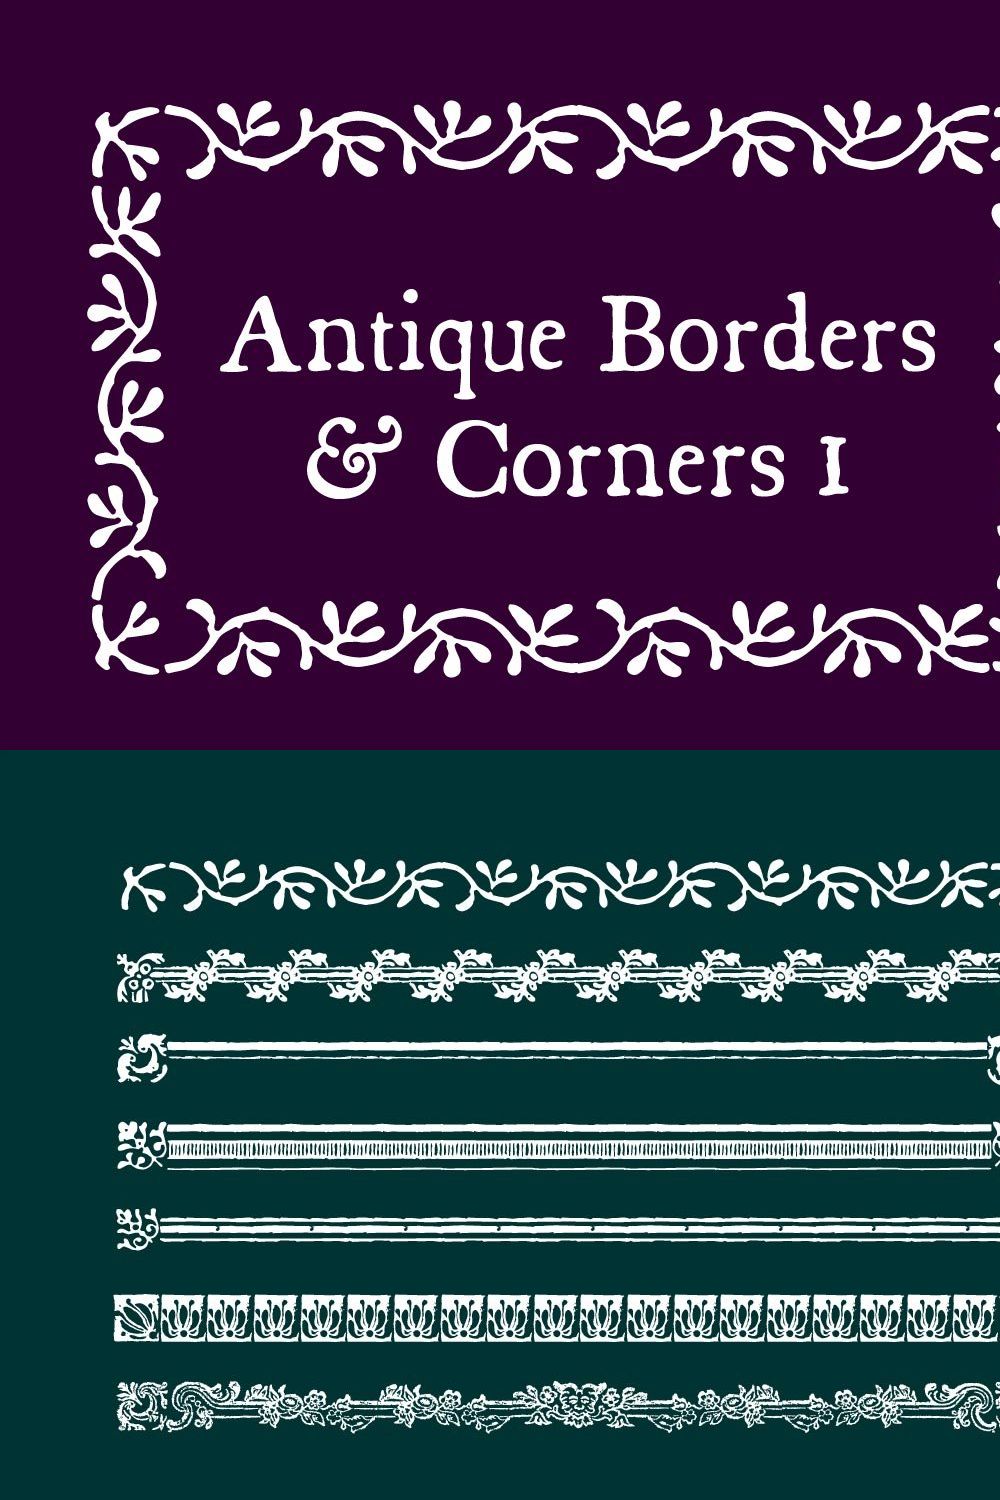 Antique Borders & Corners 1 pinterest preview image.